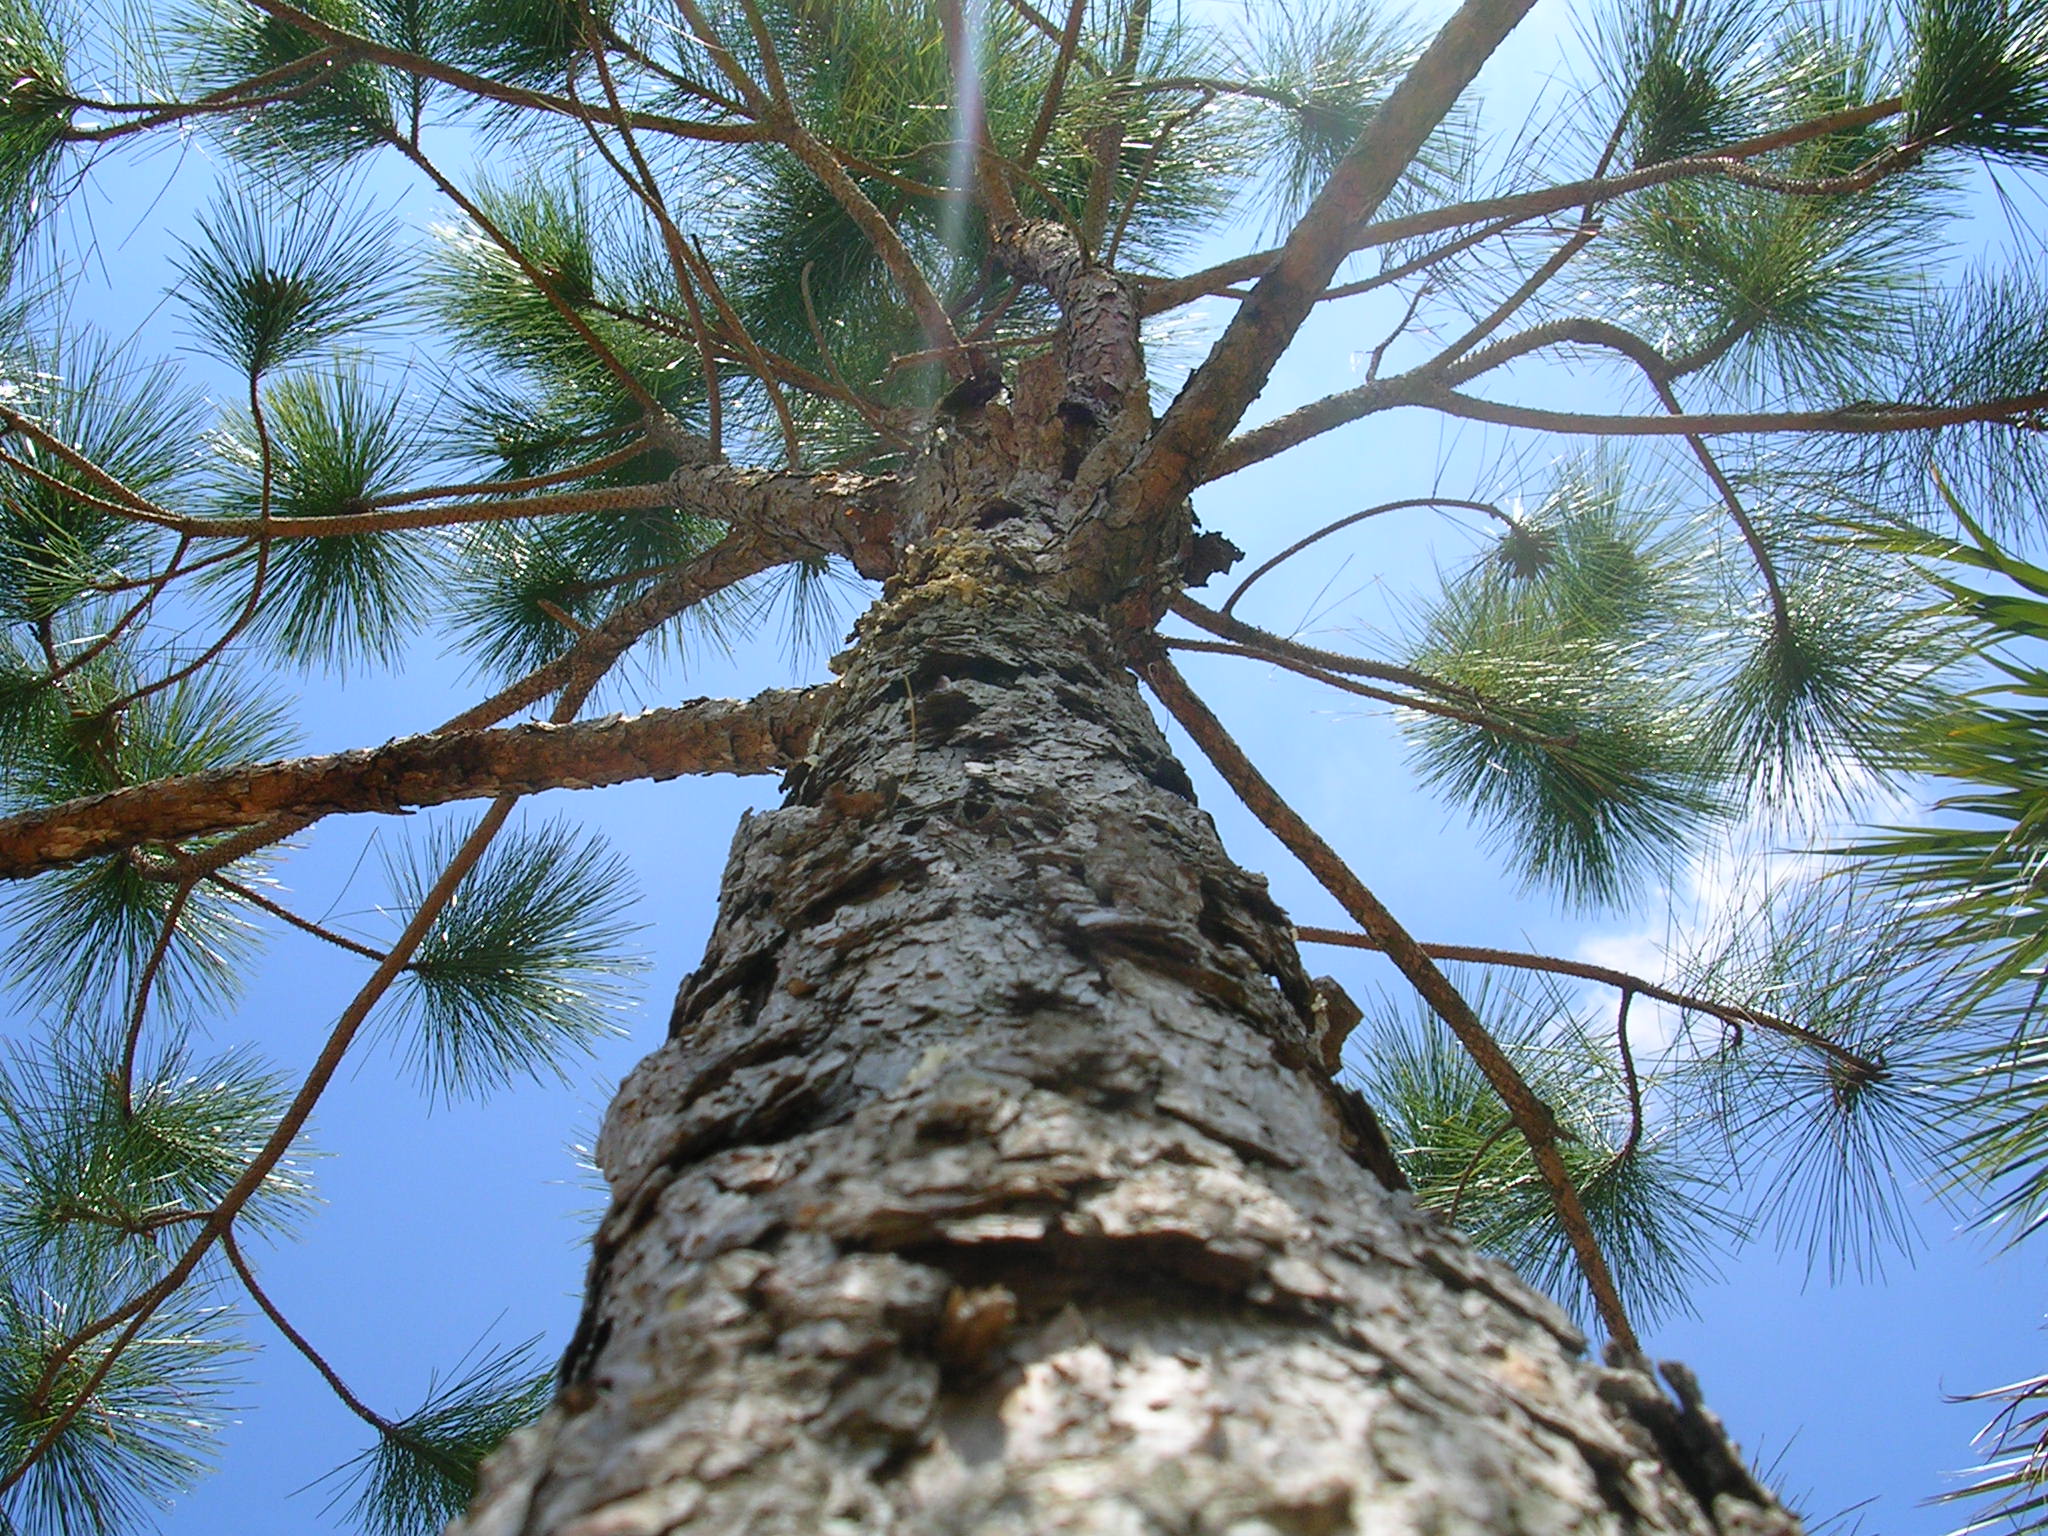 More pines photo